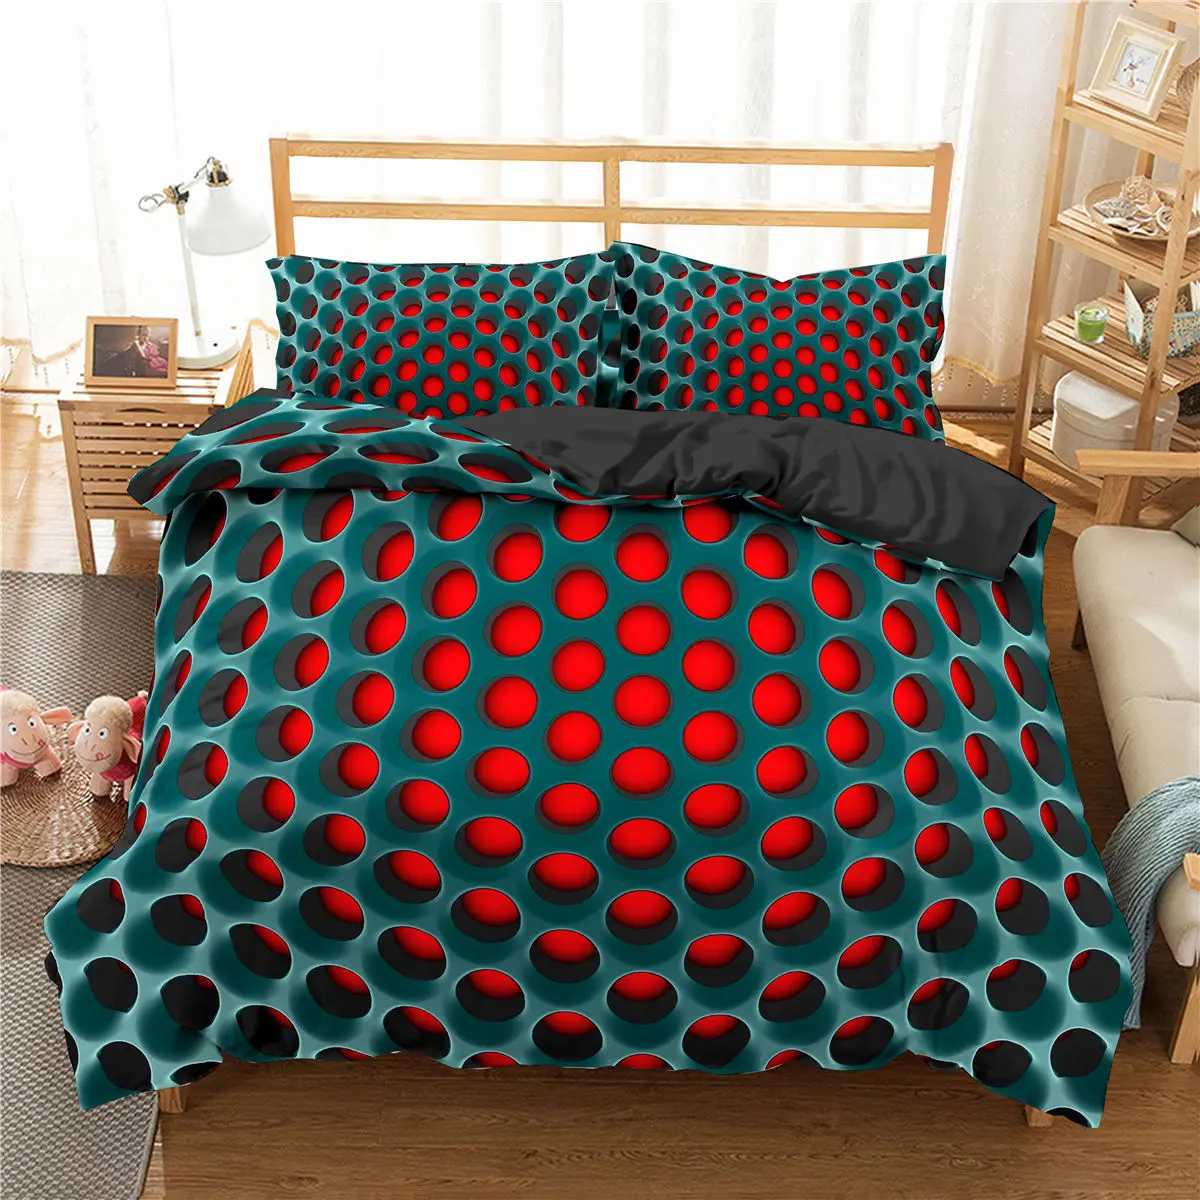 Home Textiles Luxury 3D Dot Art Duvet Cover Set Pillowcase 2/3 Pcs Kids Bedding Set AU/EU/UK/US Queen and King Size Bedding